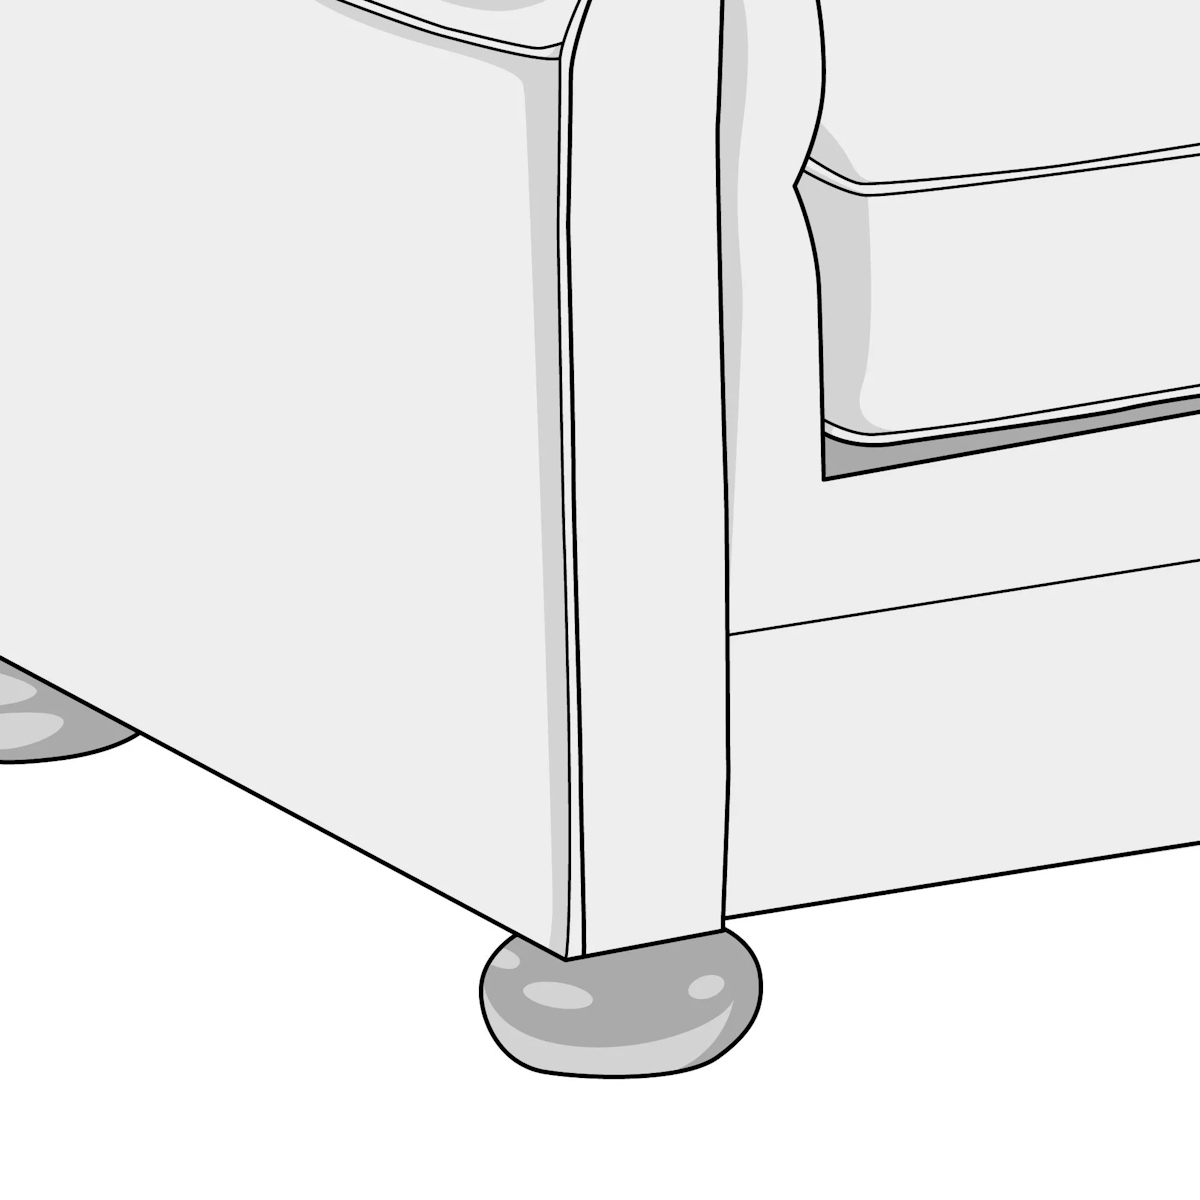 Illustration of bun foot style sofa